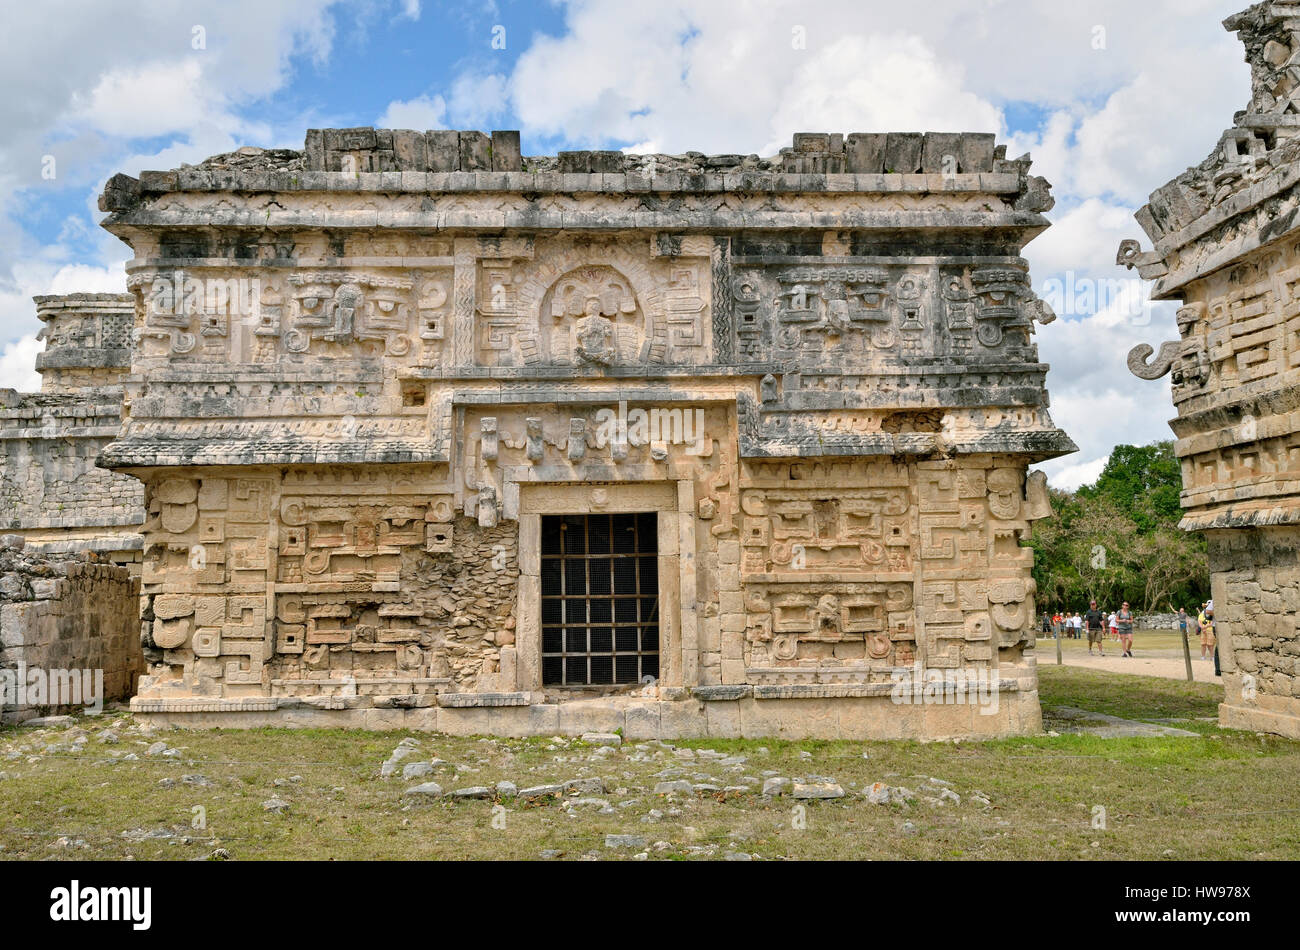 Anexo de las Monjas, house of the nuns, historic Mayan city of Chichen Itza, Piste, Yucatan, Mexico Stock Photo